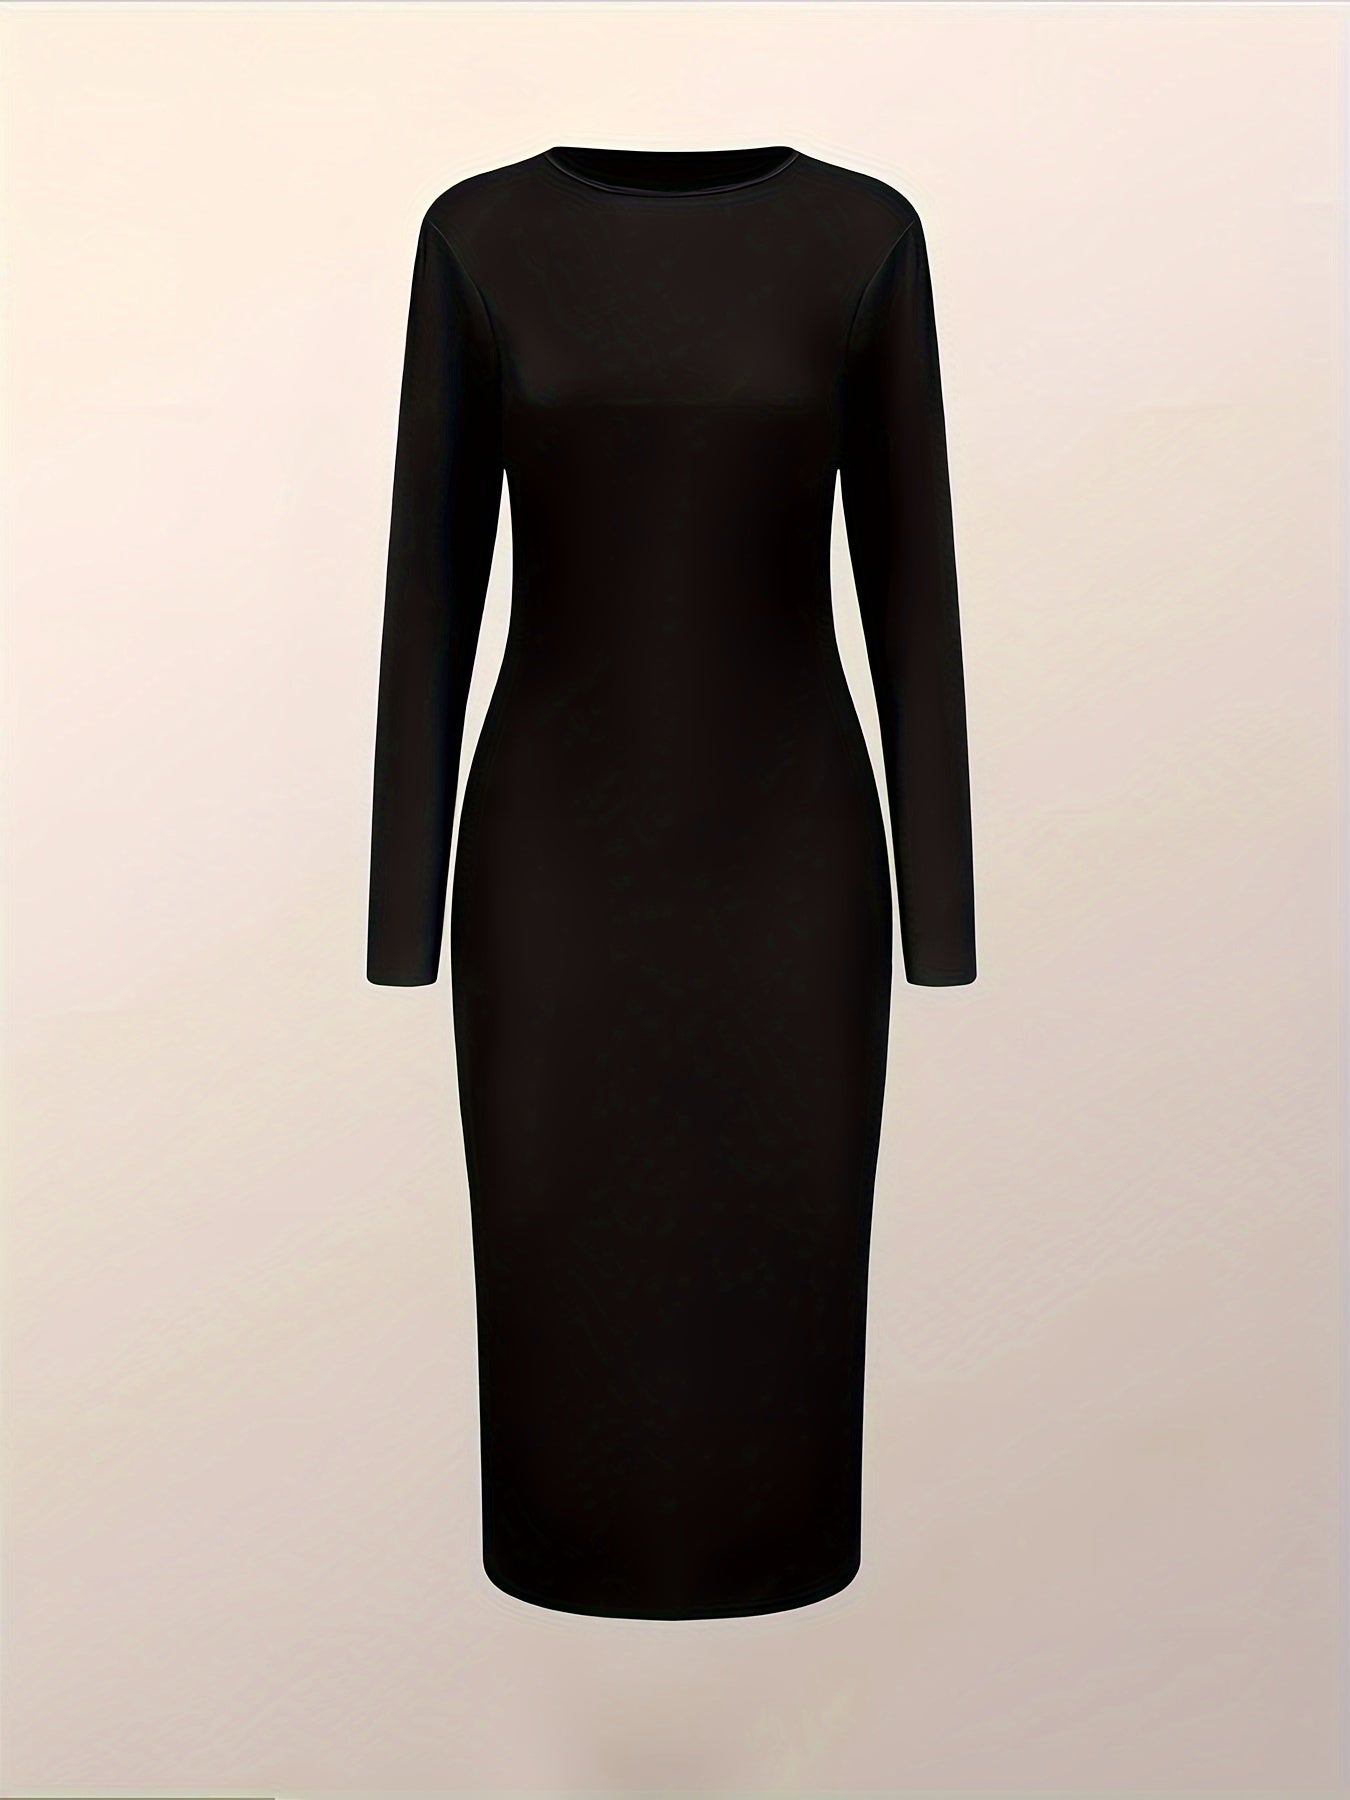 Antmvs Split Solid Bodycon Dress, Casual Crew Neck Long Sleeve Midi Dress, Women's Clothing